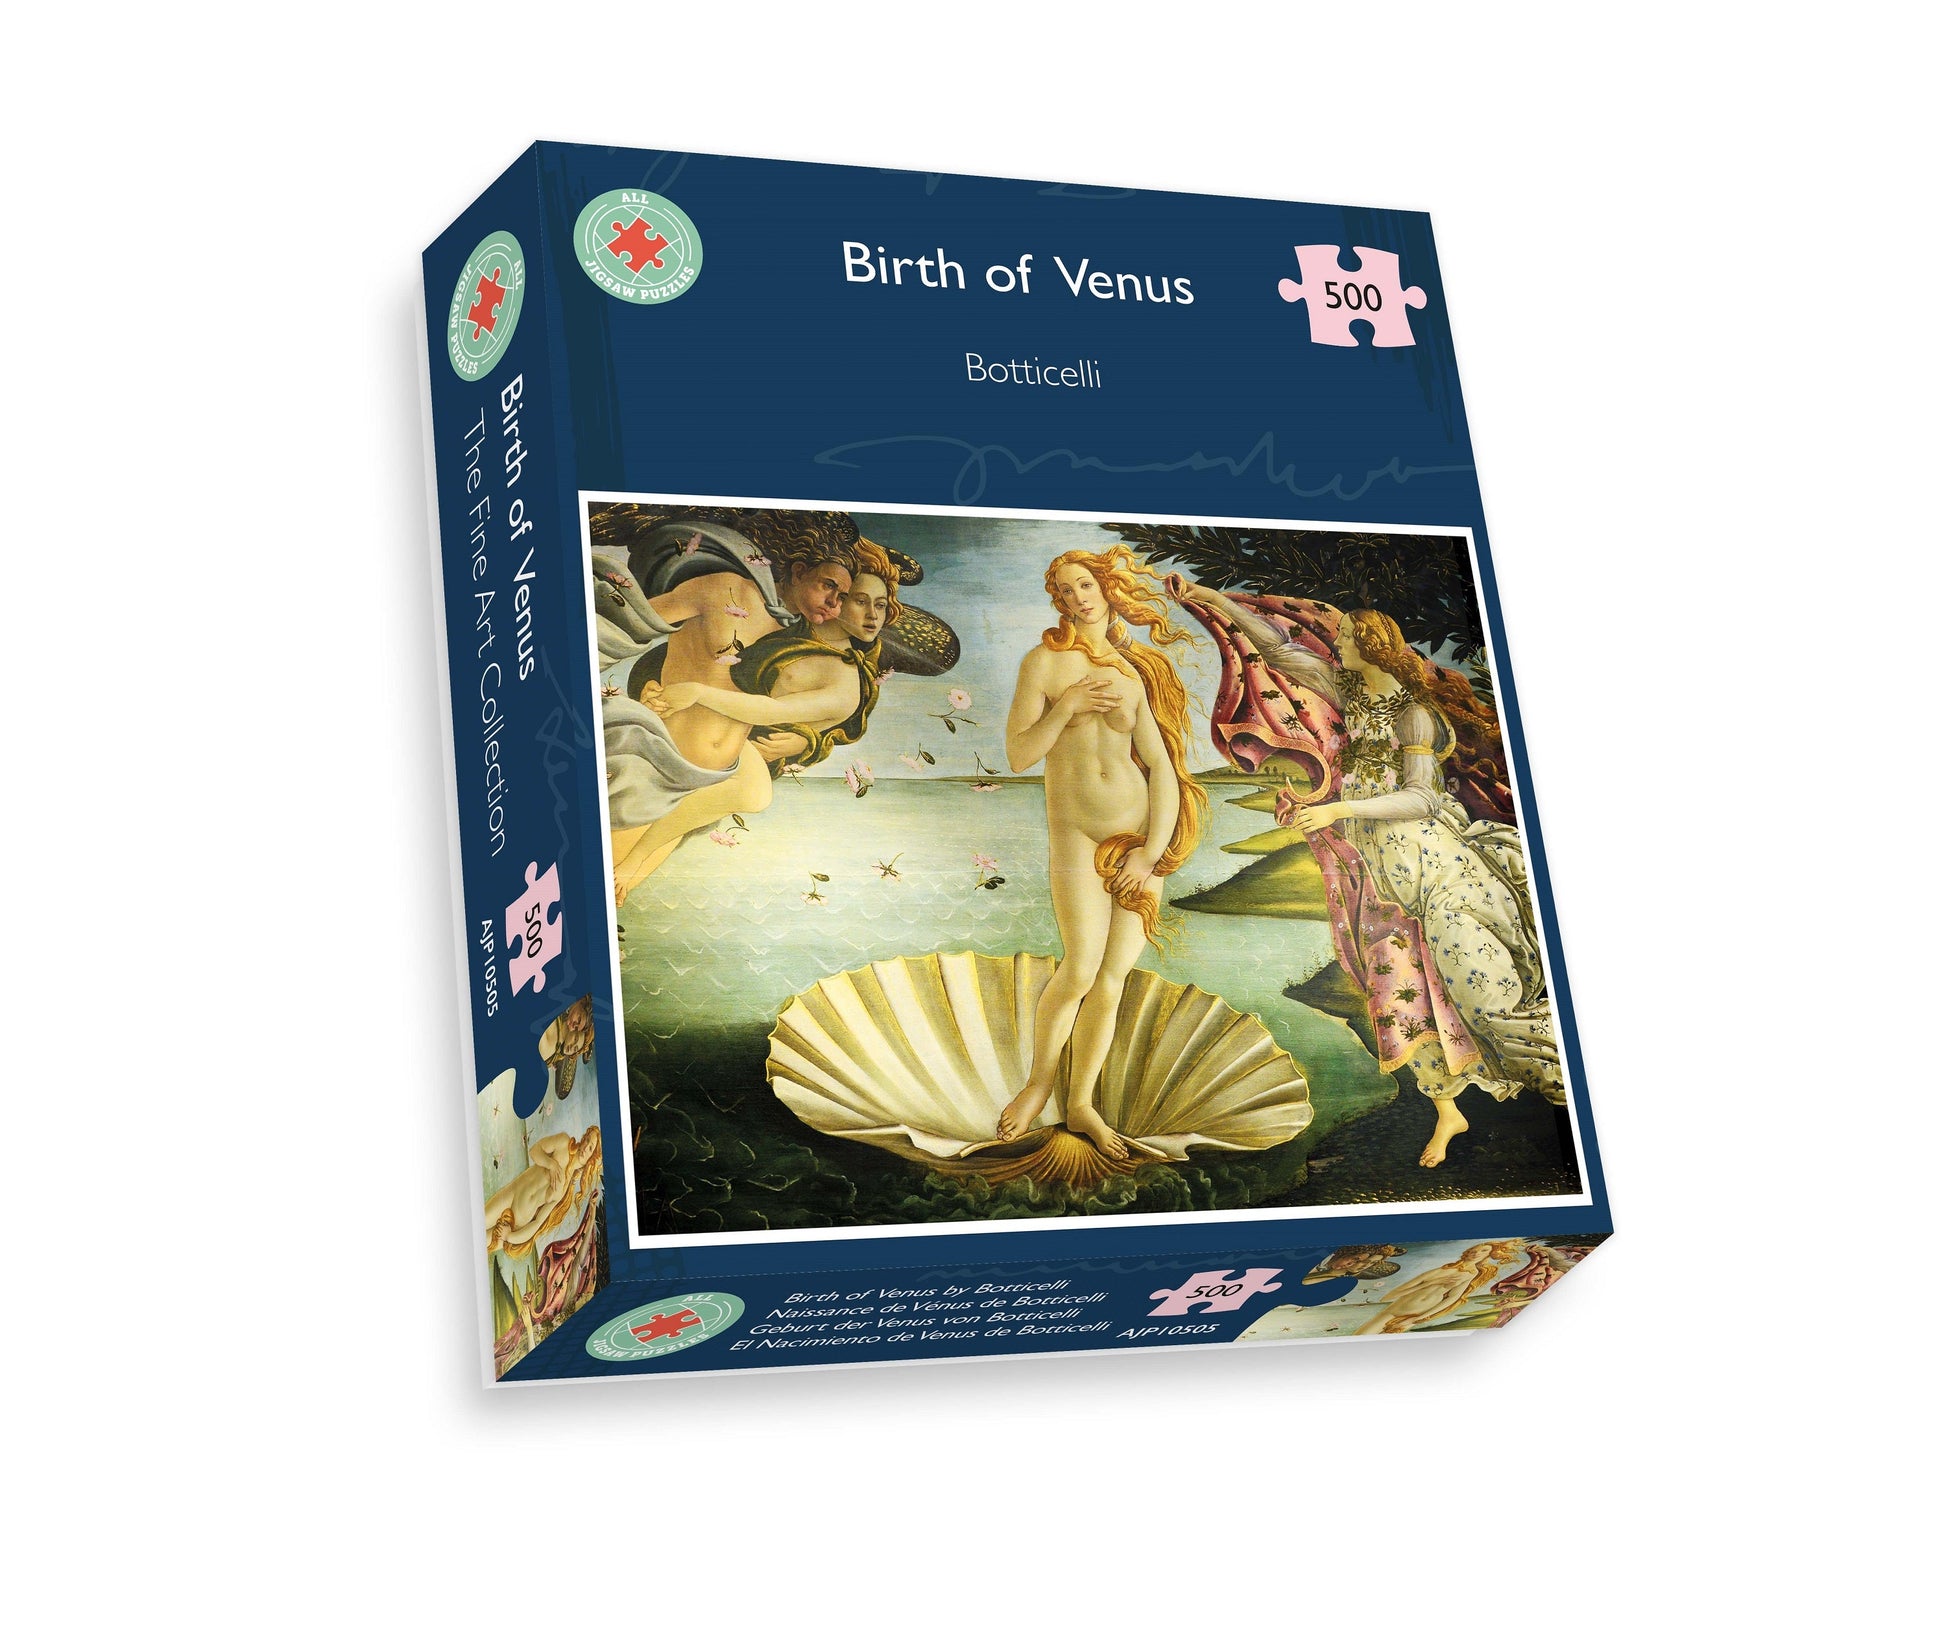 Birth of Venus by Botticelli 500 Piece Jigsaw Puzzles